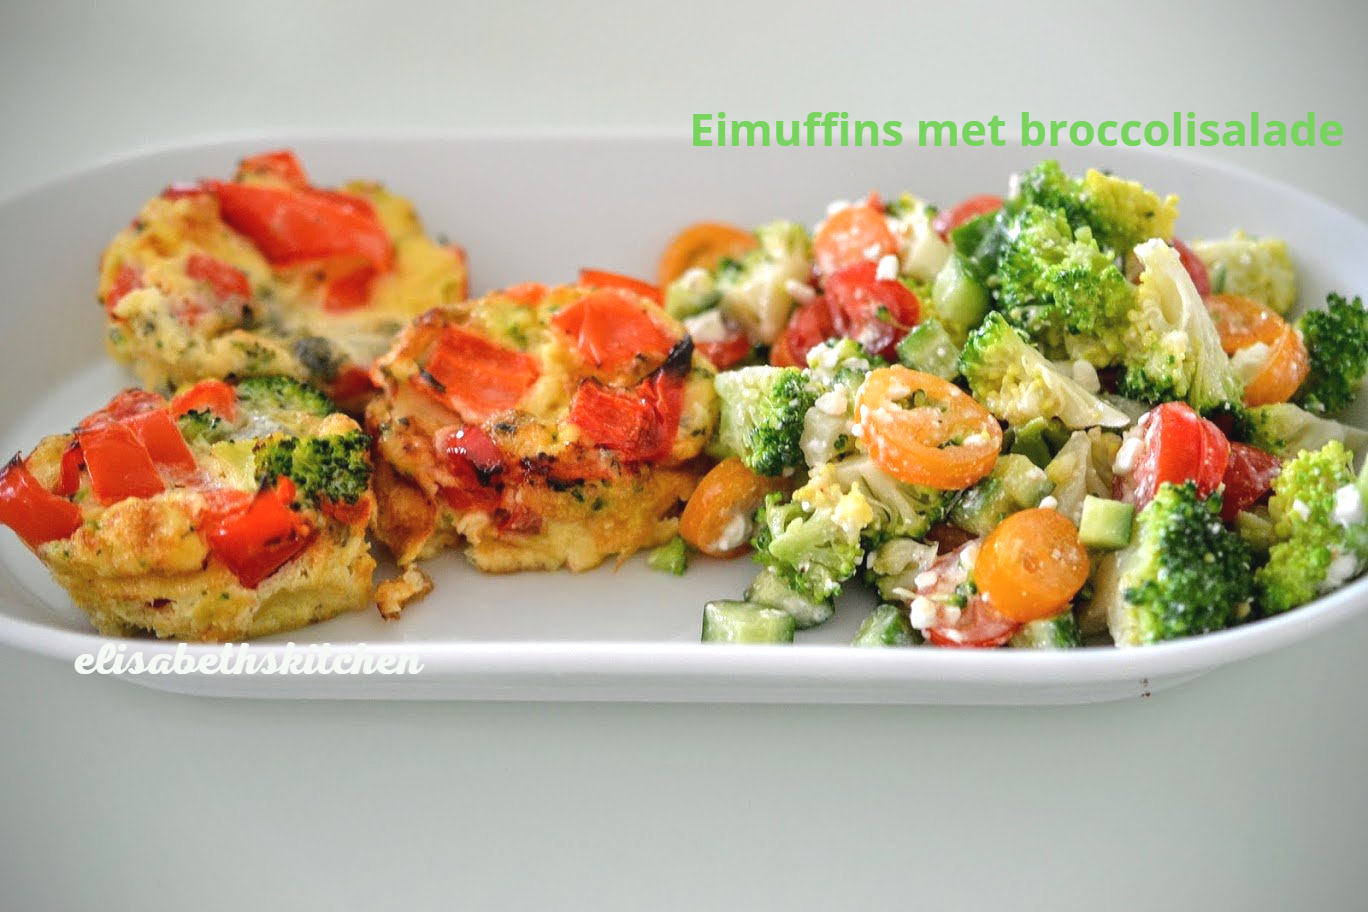 Eimuffins met broccolisalade